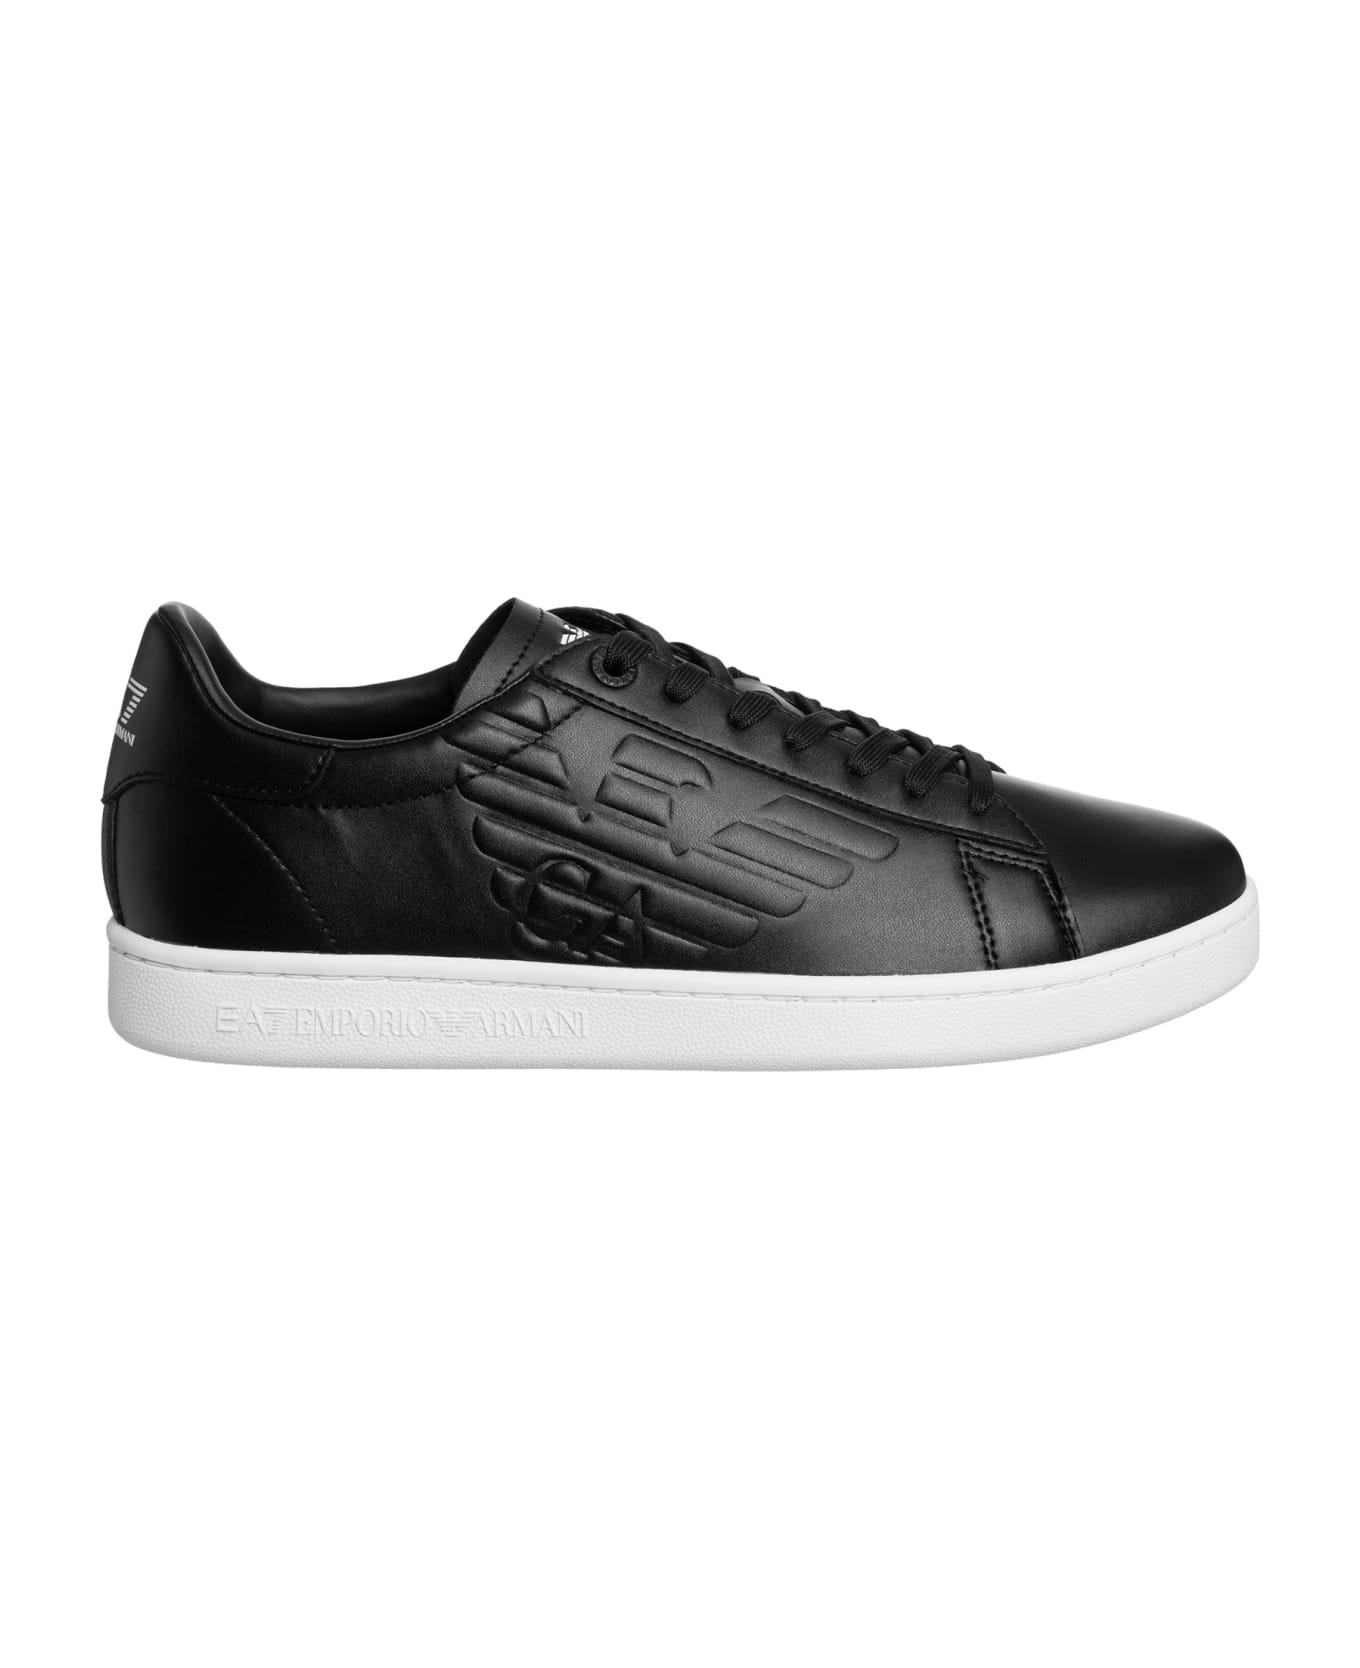 EA7 Classic Cc Leather Sneakers - Black 1